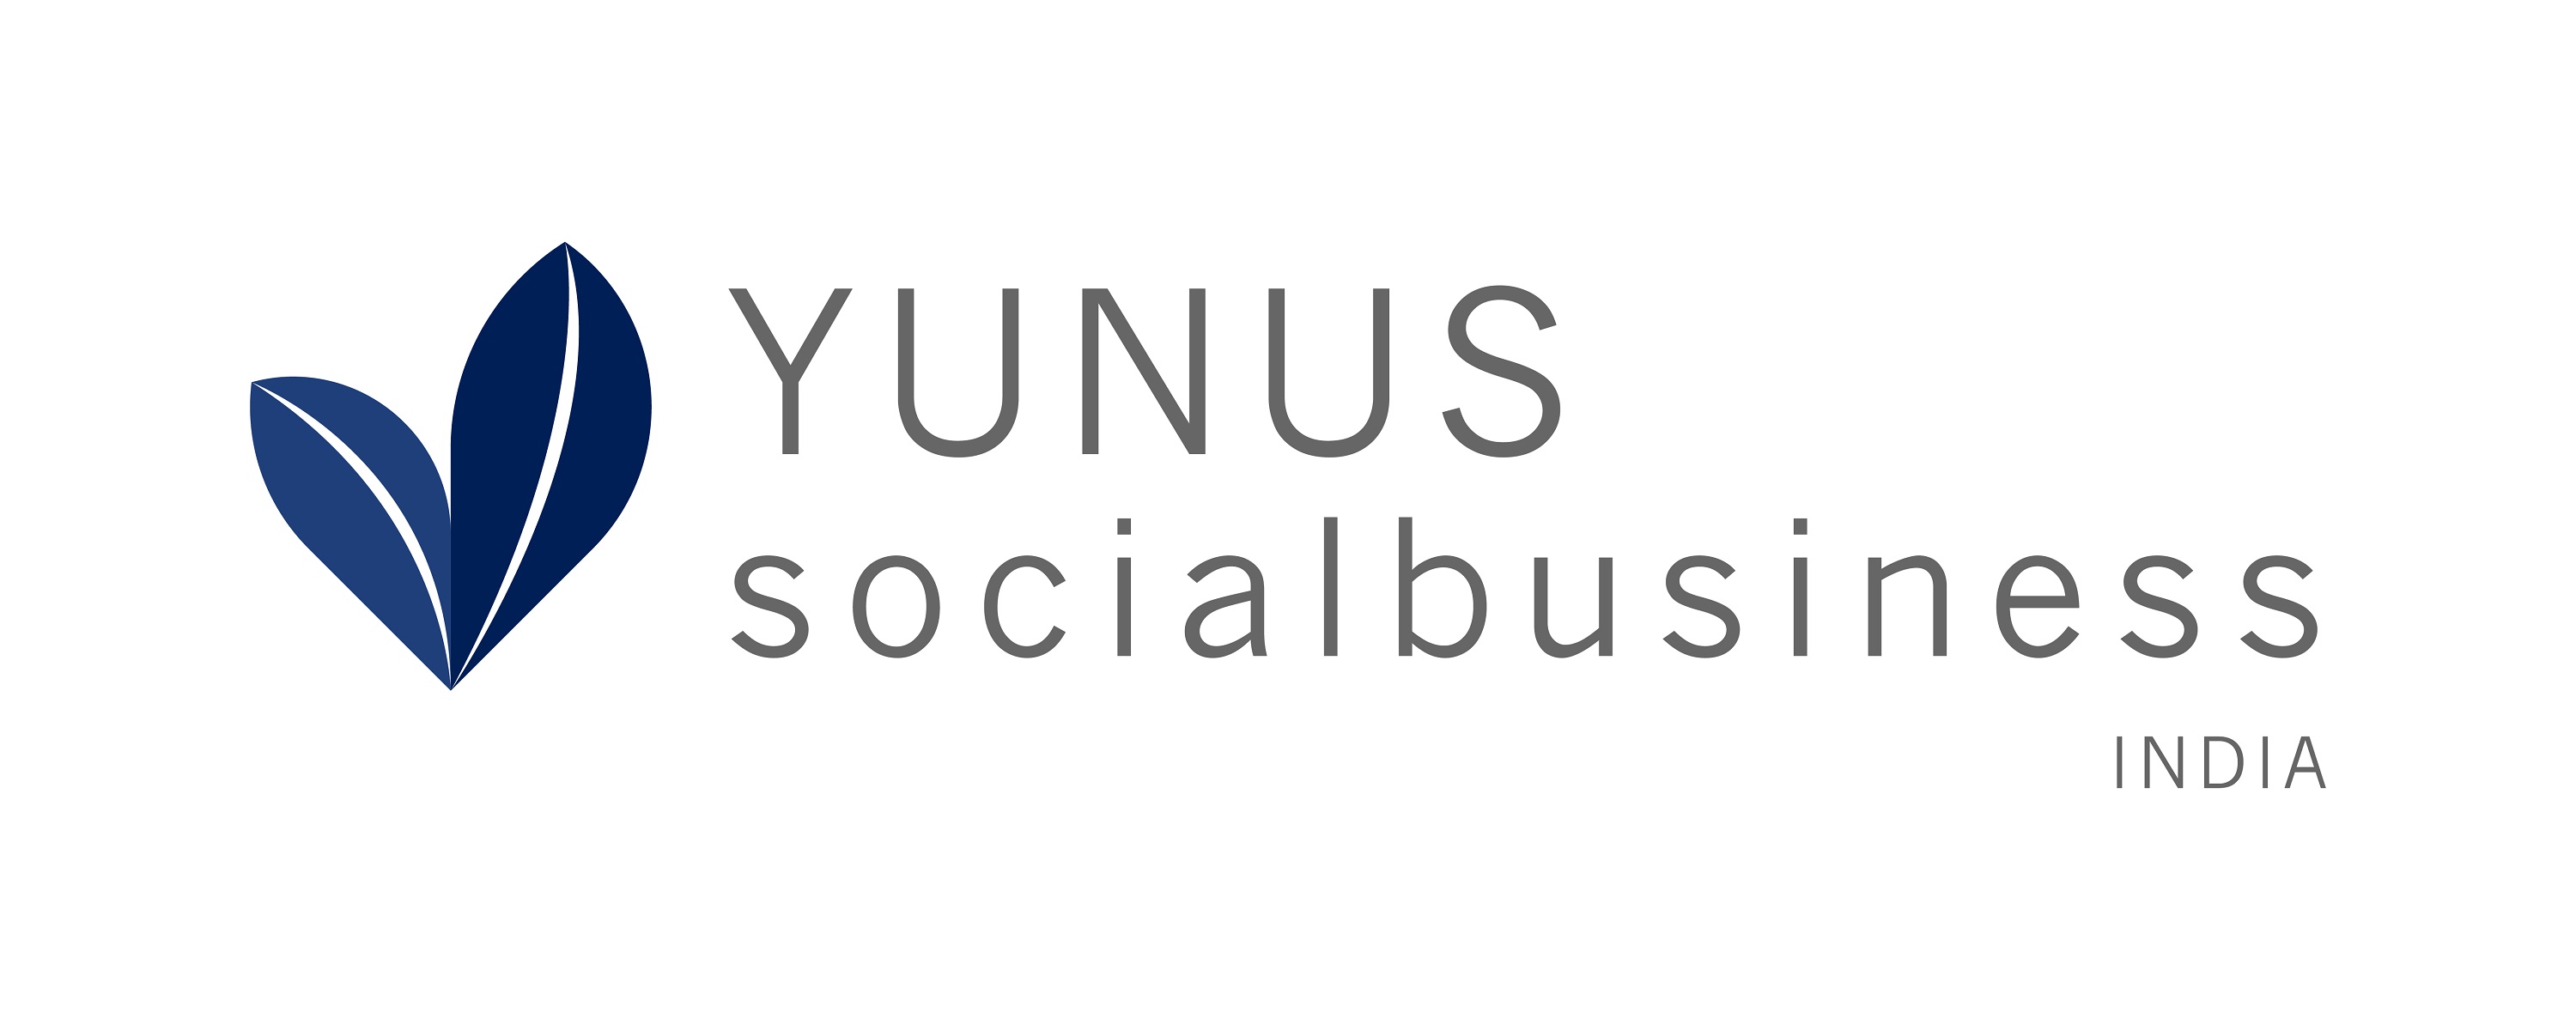 Yunus Social Business India